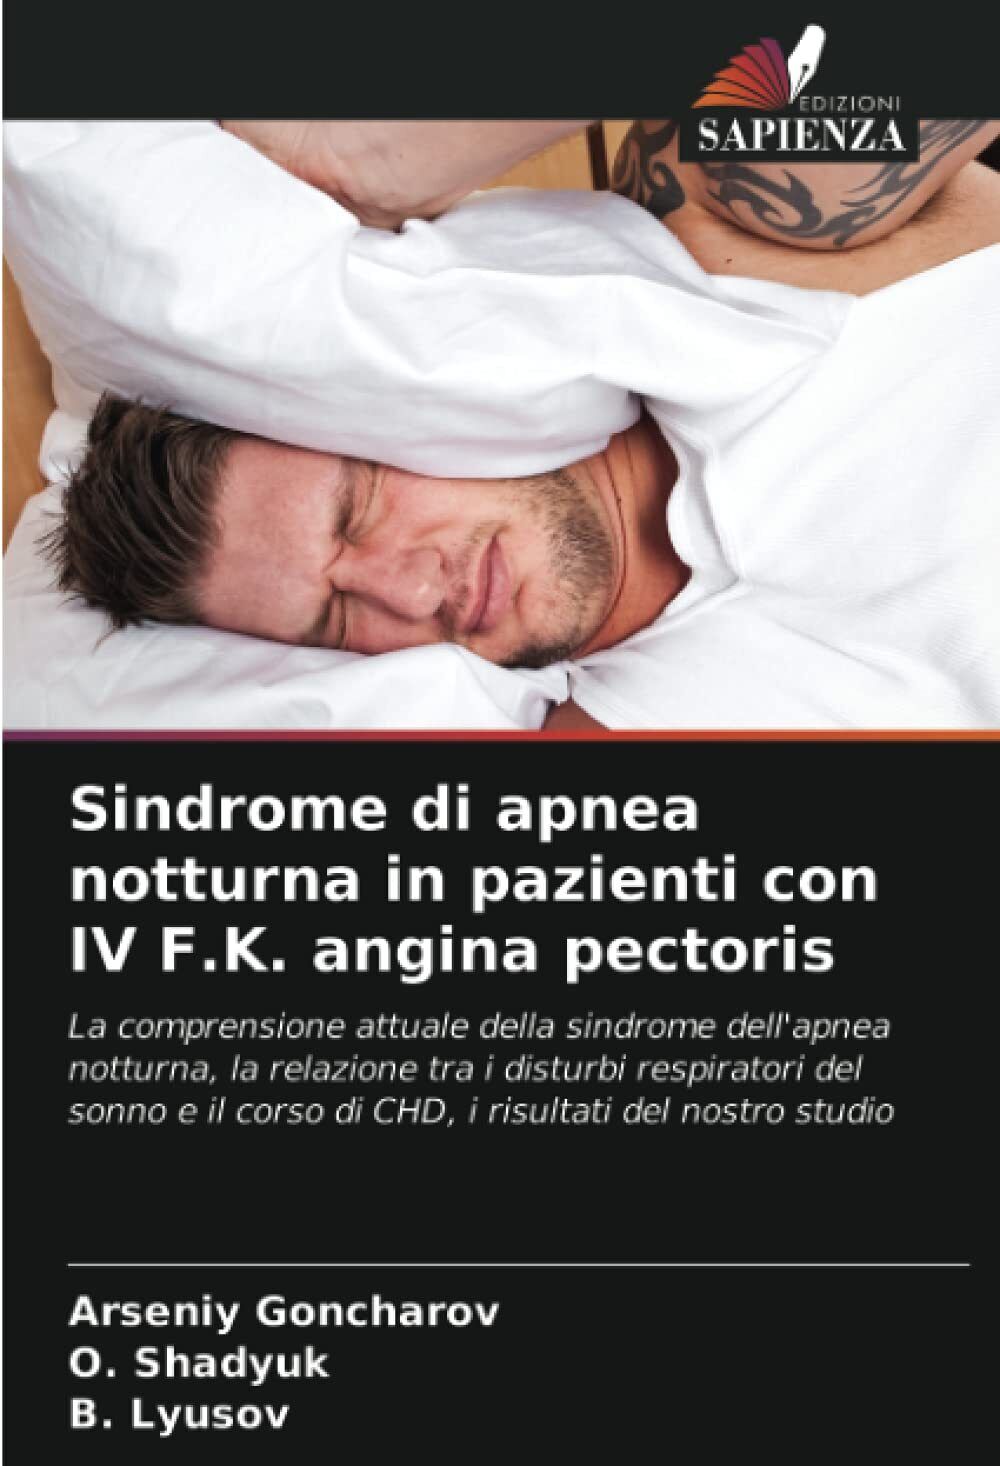 Sindrome di apnea notturna in pazienti con IV F.K. angina pectoris - 2021